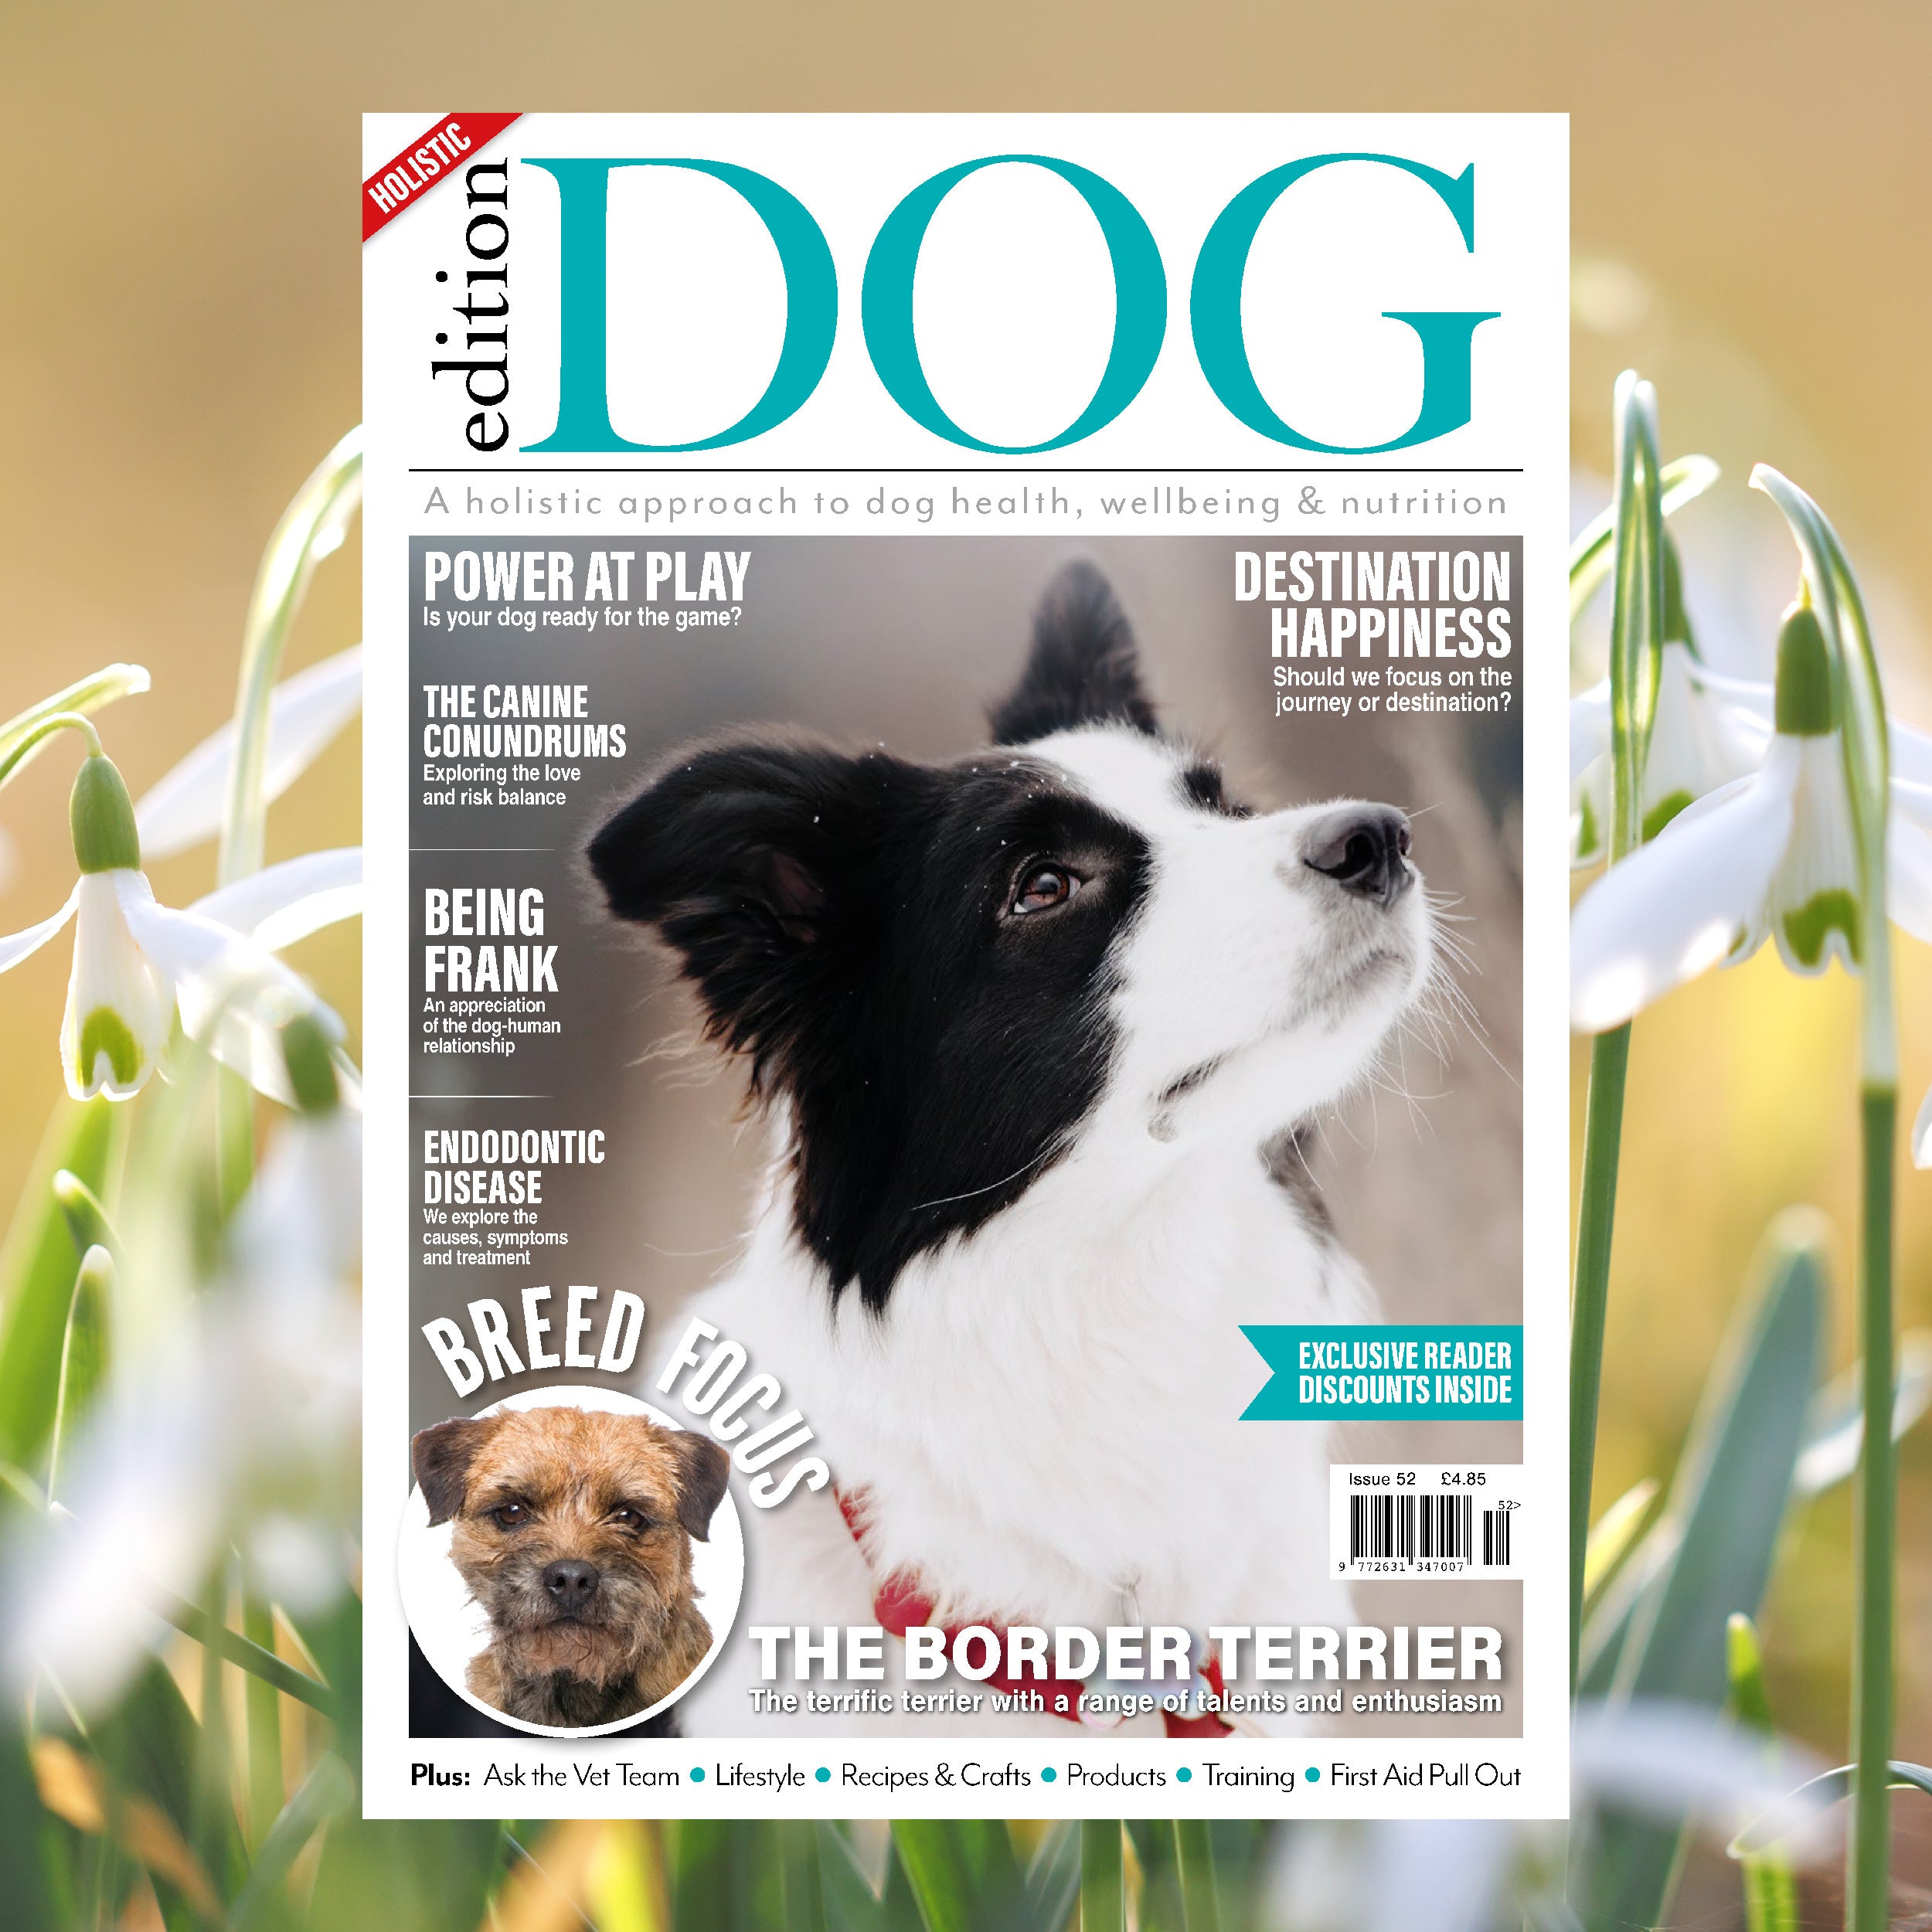 Edition Dog free issue